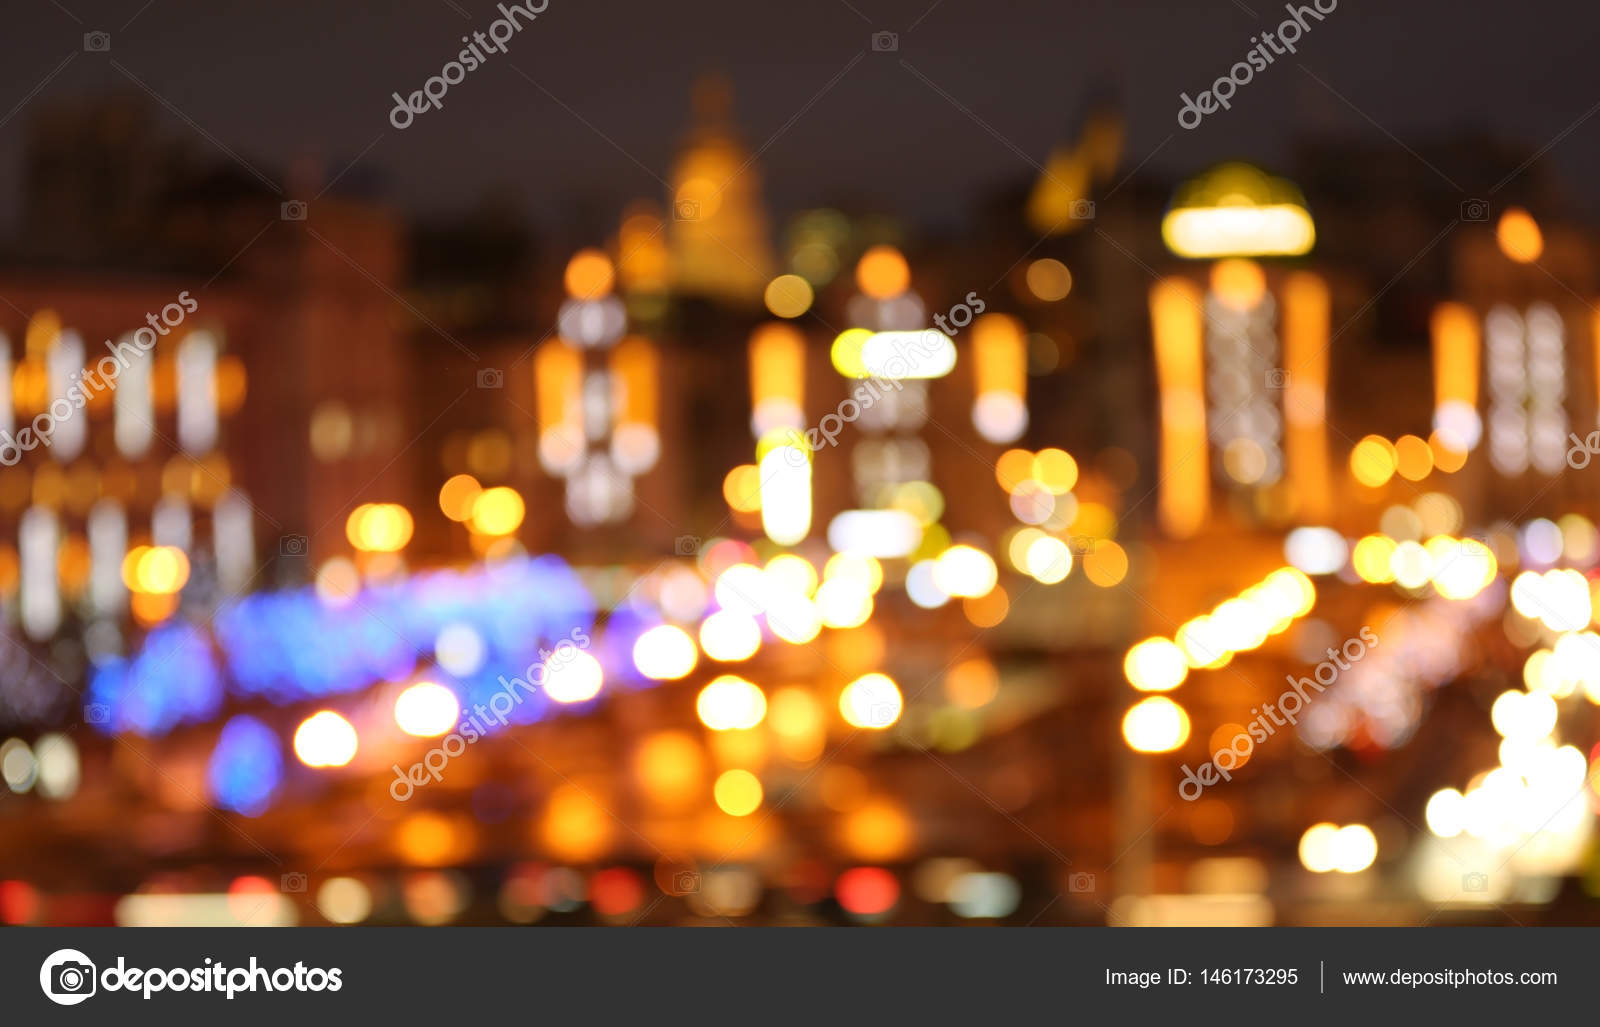 Colorful Night City Lights — Stock Photo © Belchonock 146173295